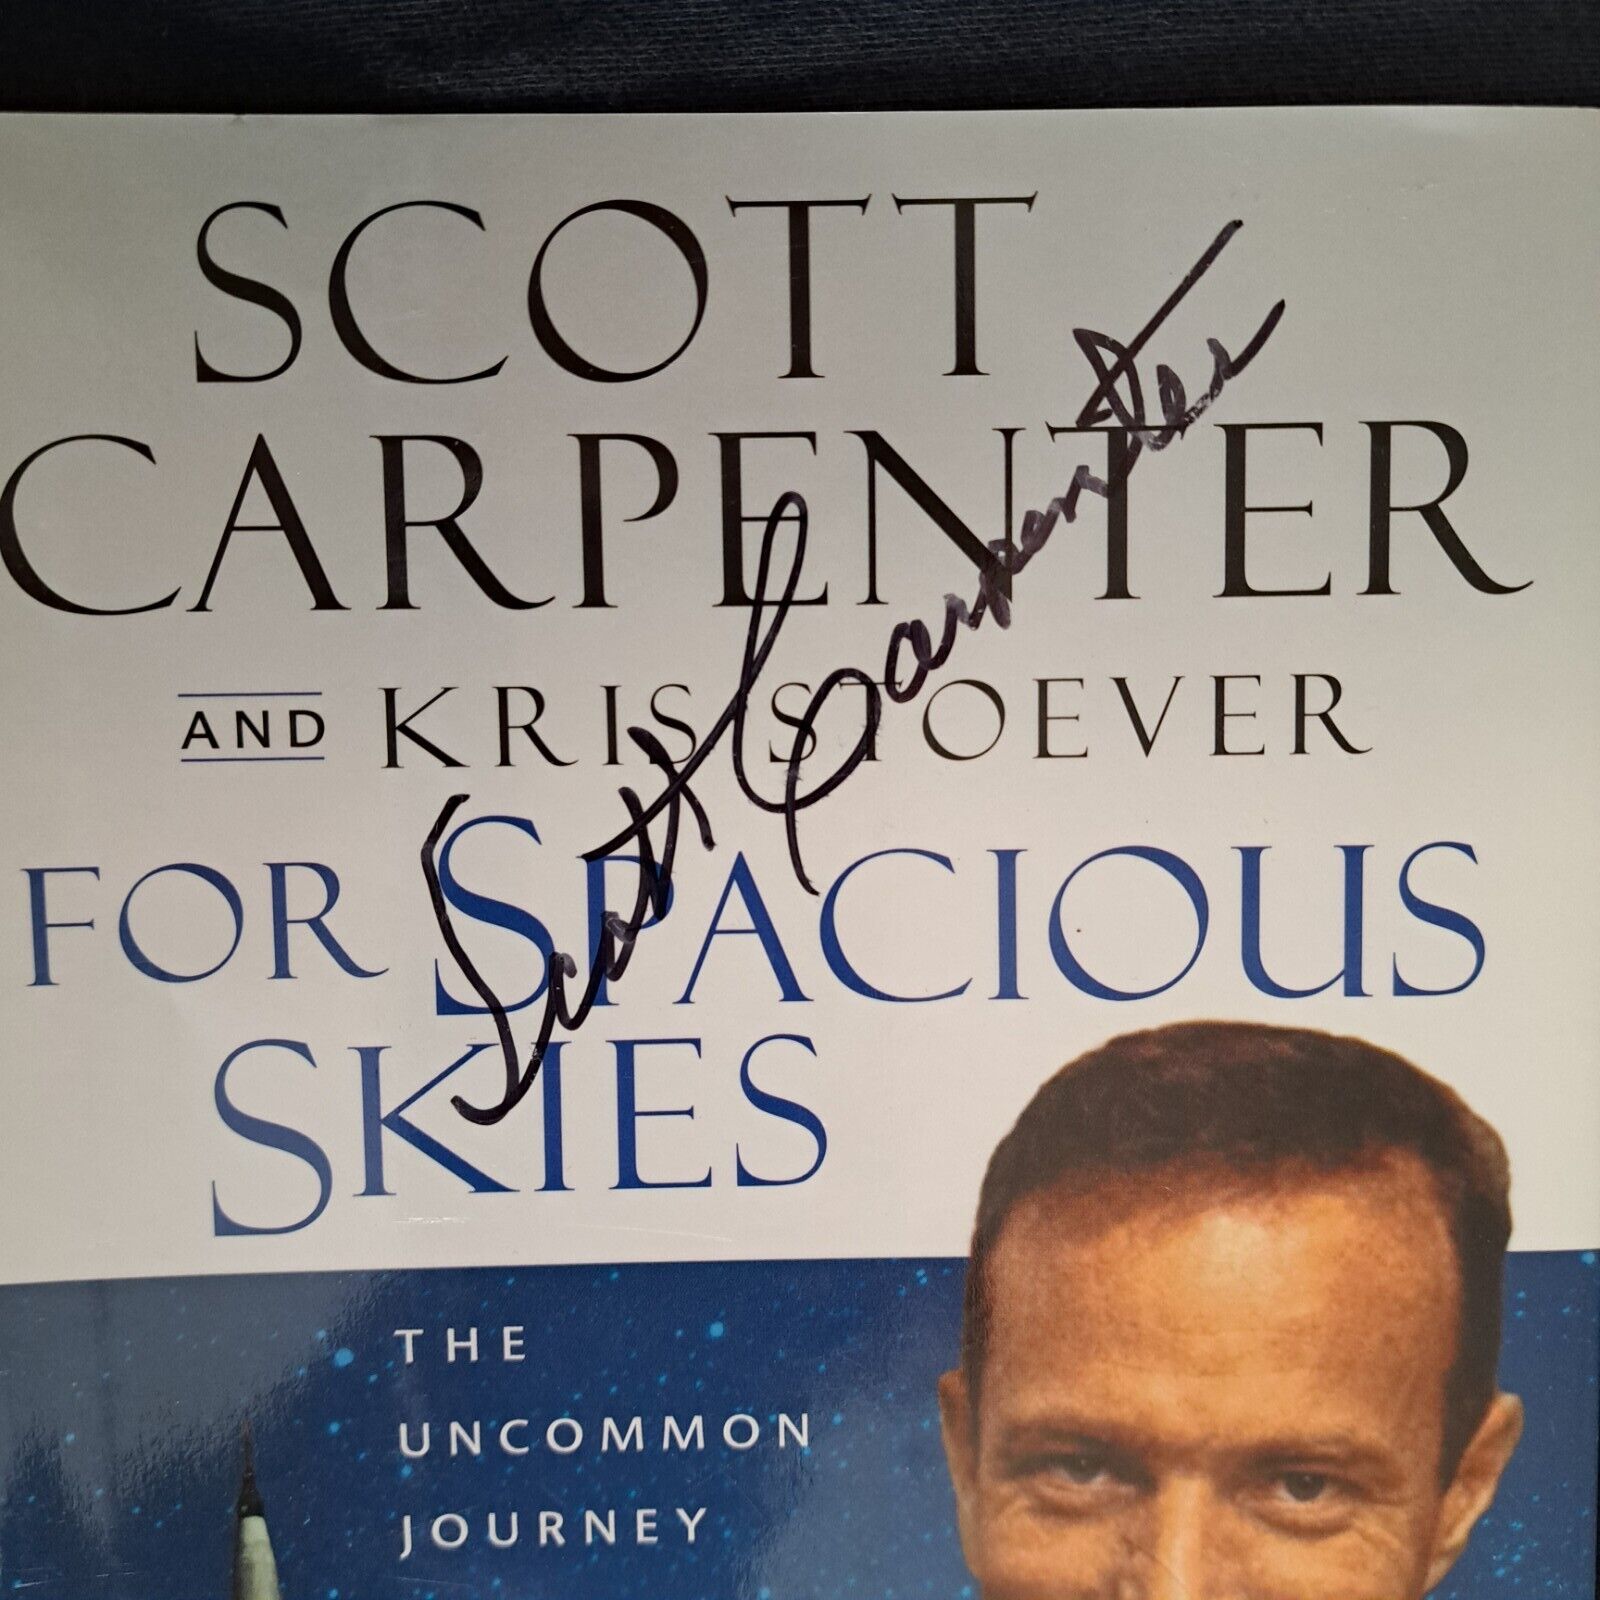 Scott Carpenter Signed Book Cover JSA For Spacious Skies